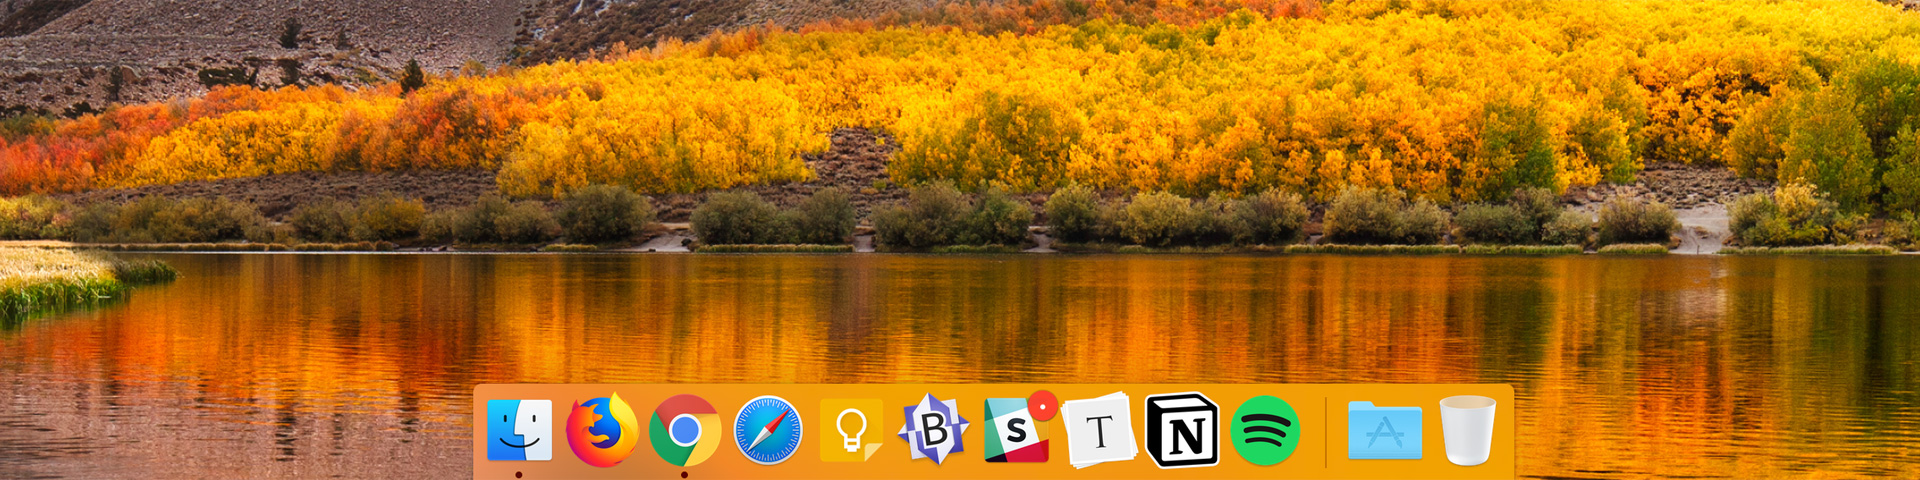 A screenshot of my macOS desktop. The default "high sierra" desktop image appears in the background.